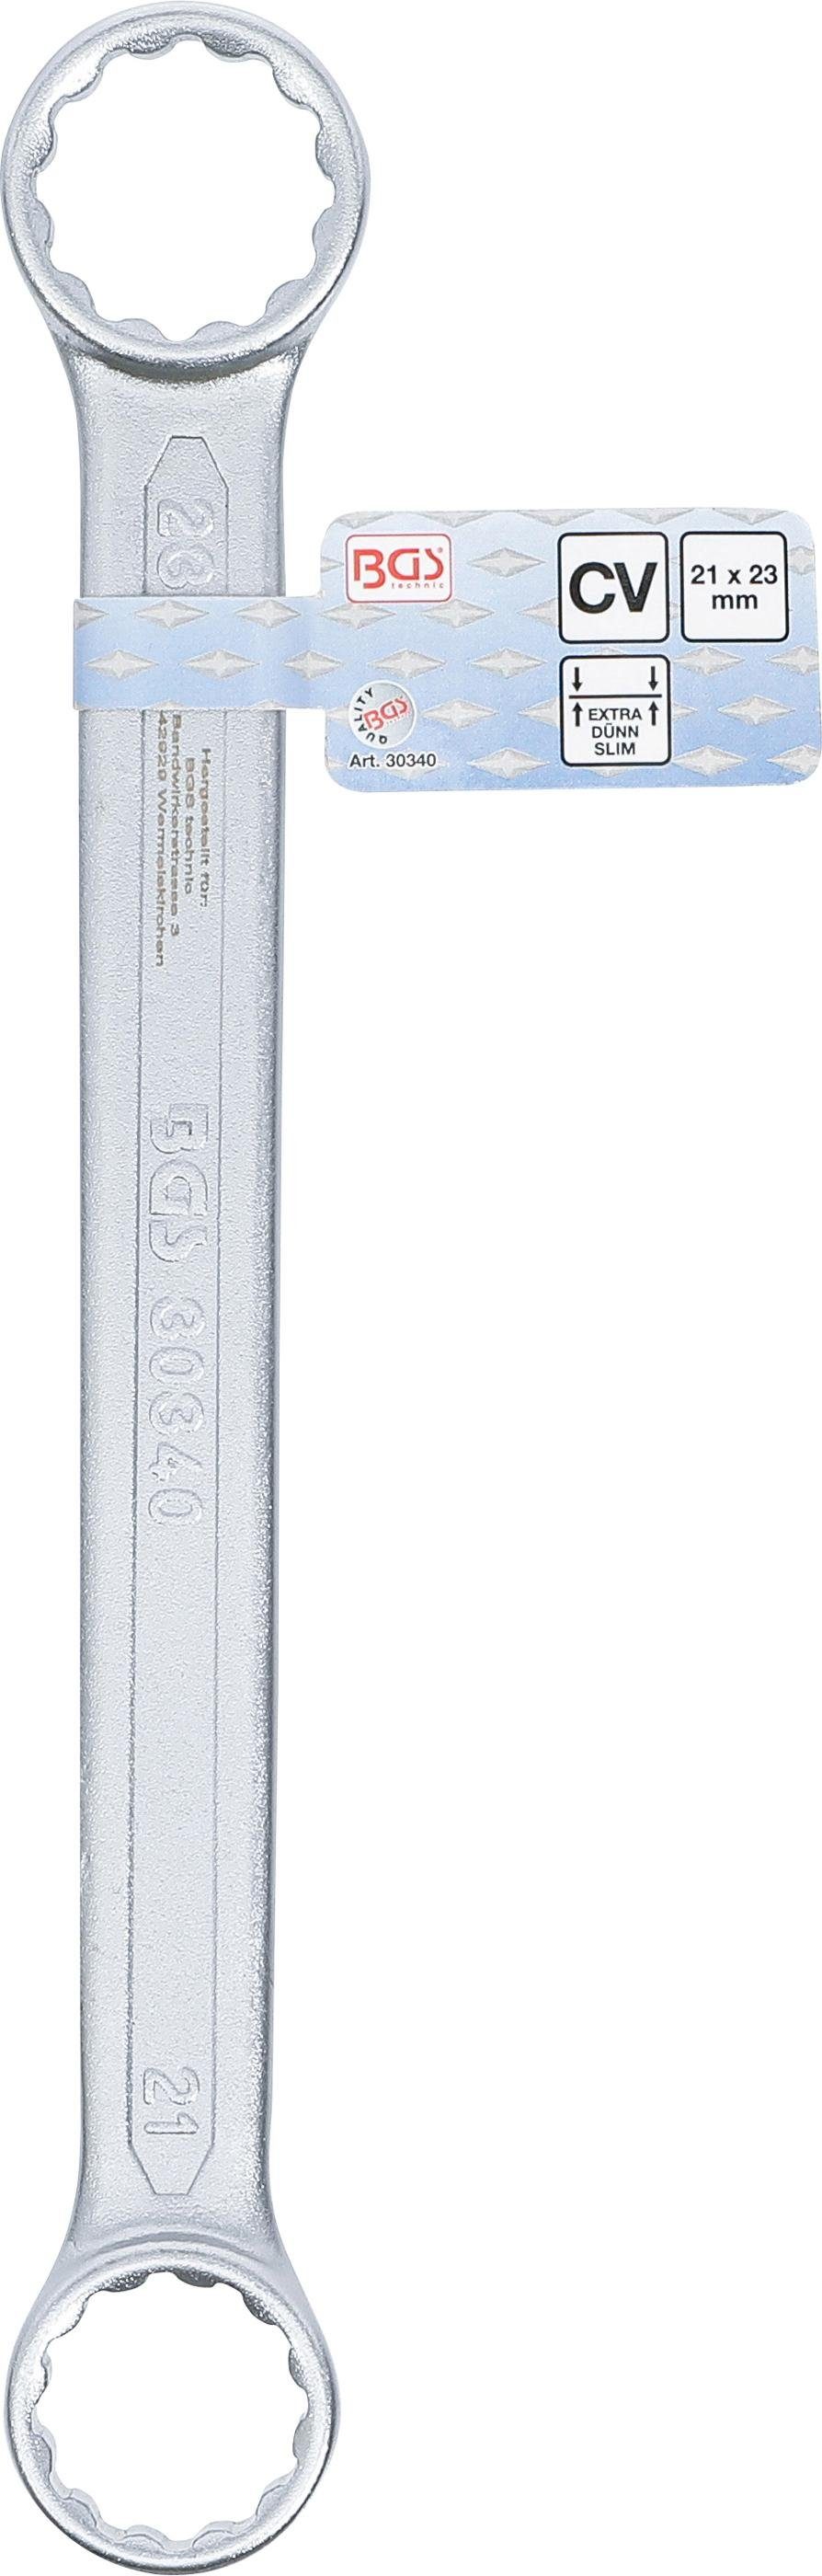 Doppel-Ringschlüssel, extra 23 BGS technic mm x SW 21 Ringschlüssel flach,